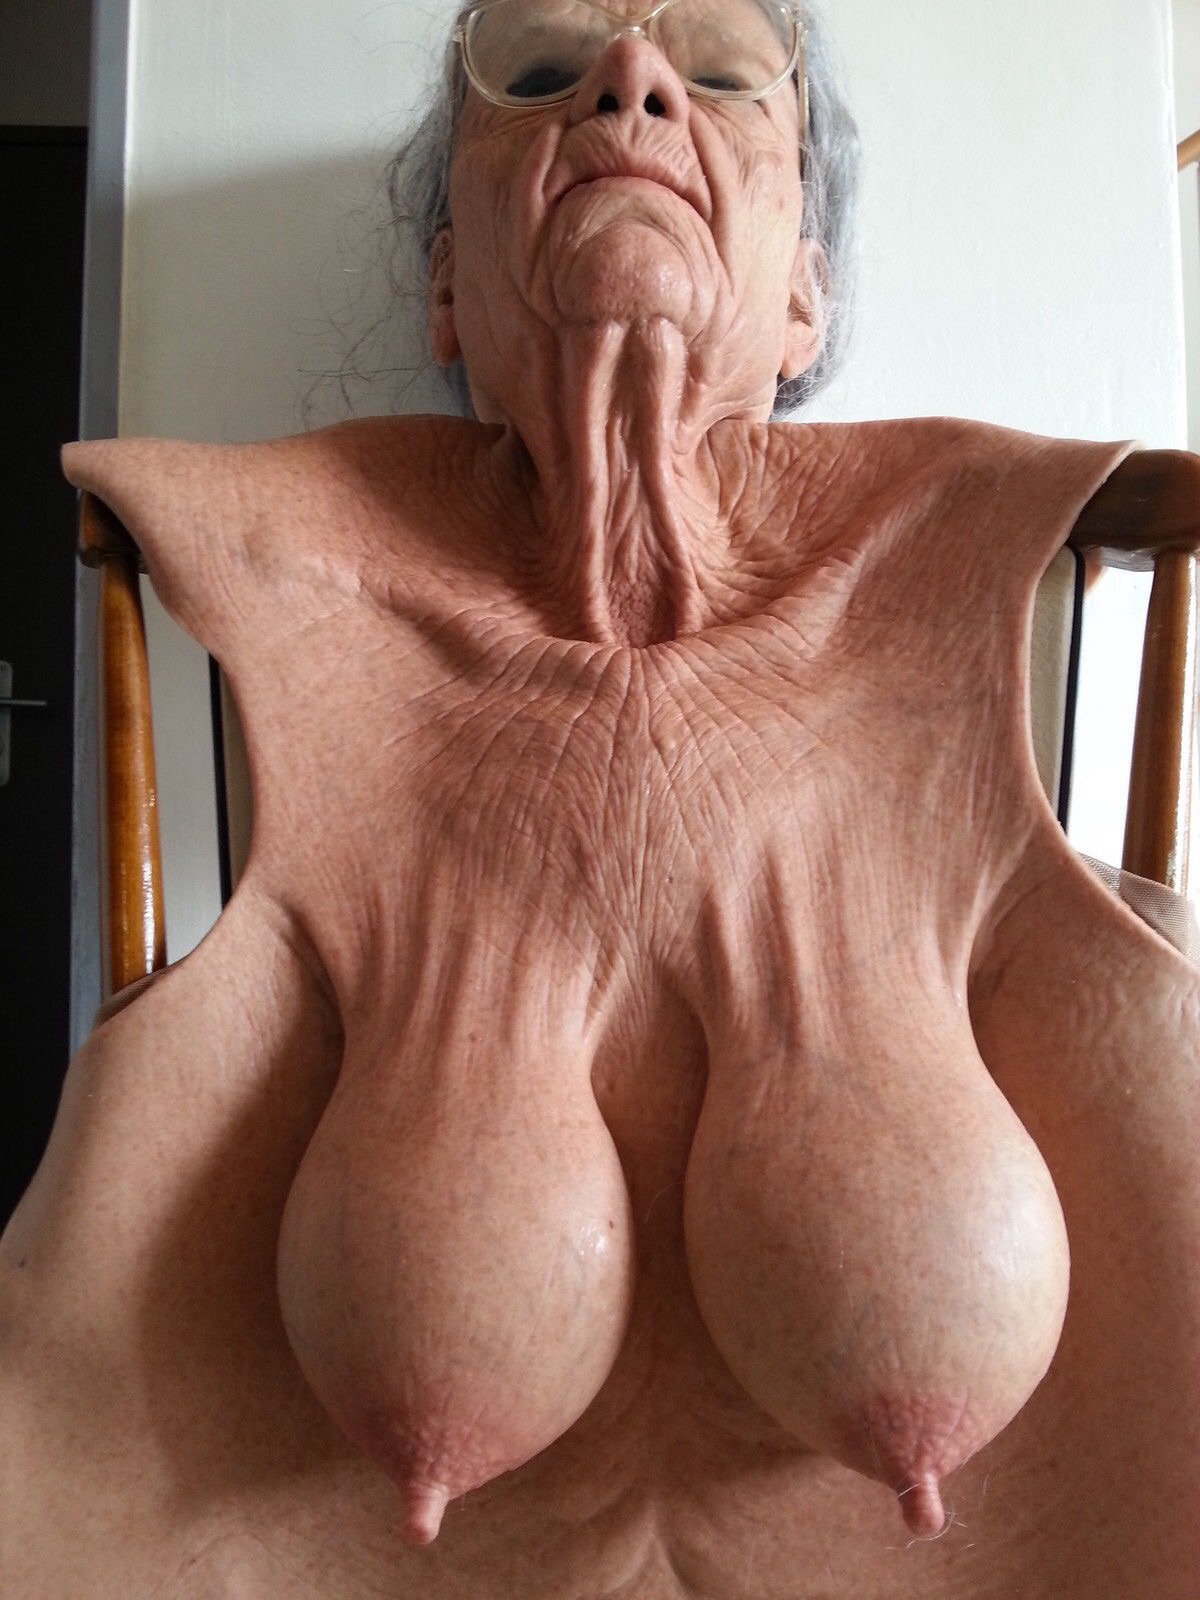 Nice Tits Granny